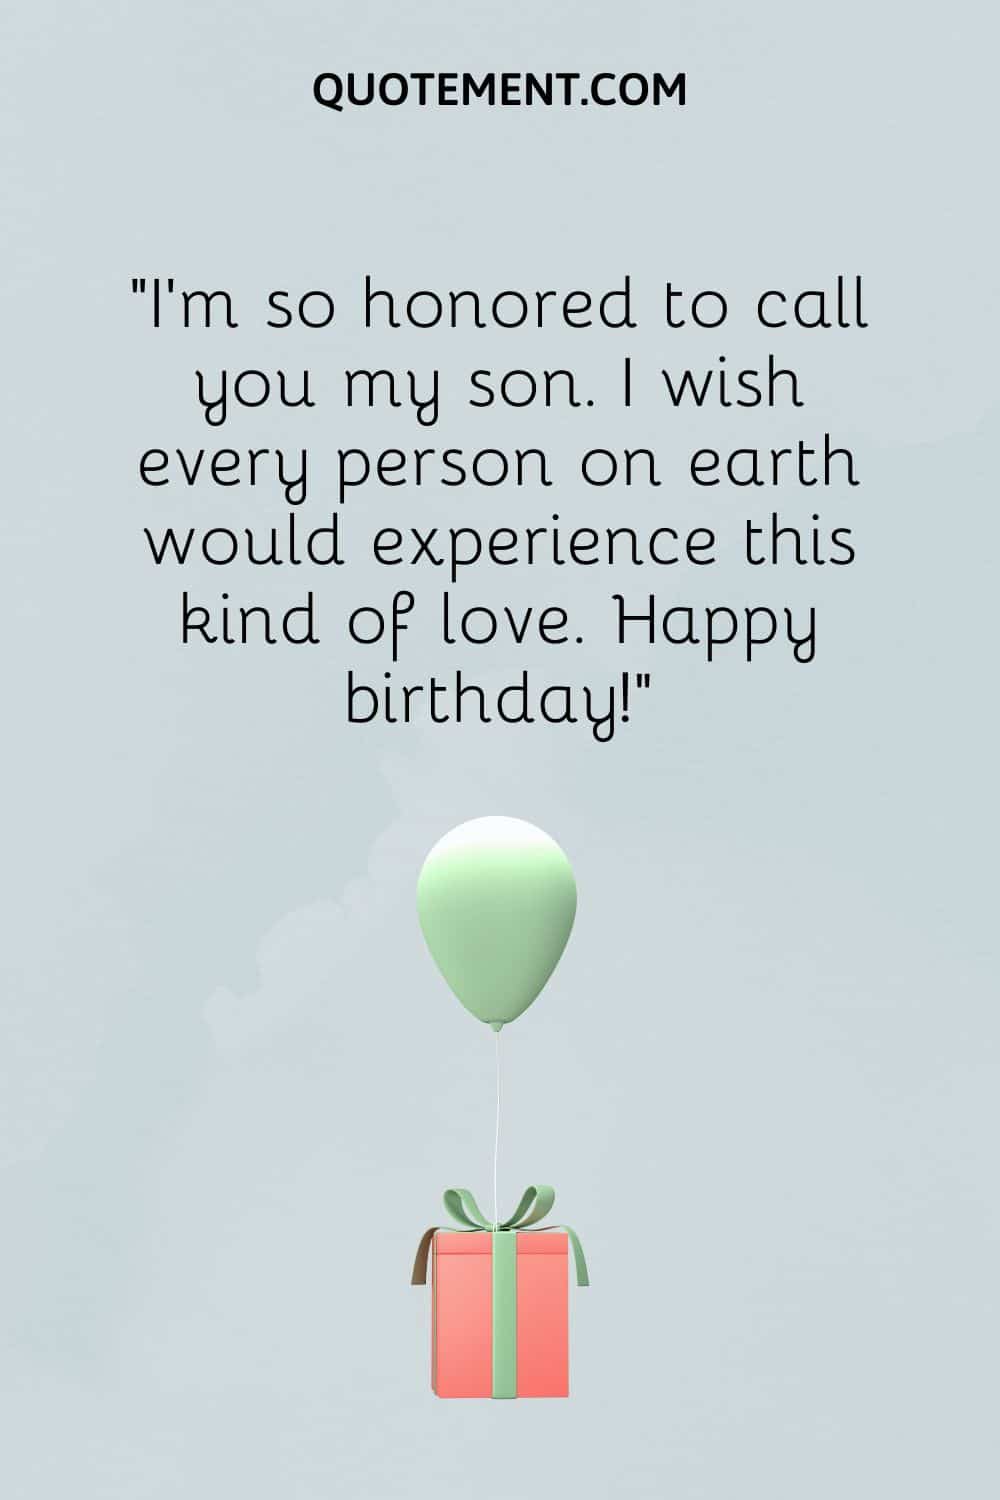 illustration representing heartfelt birthday wish for son from mother